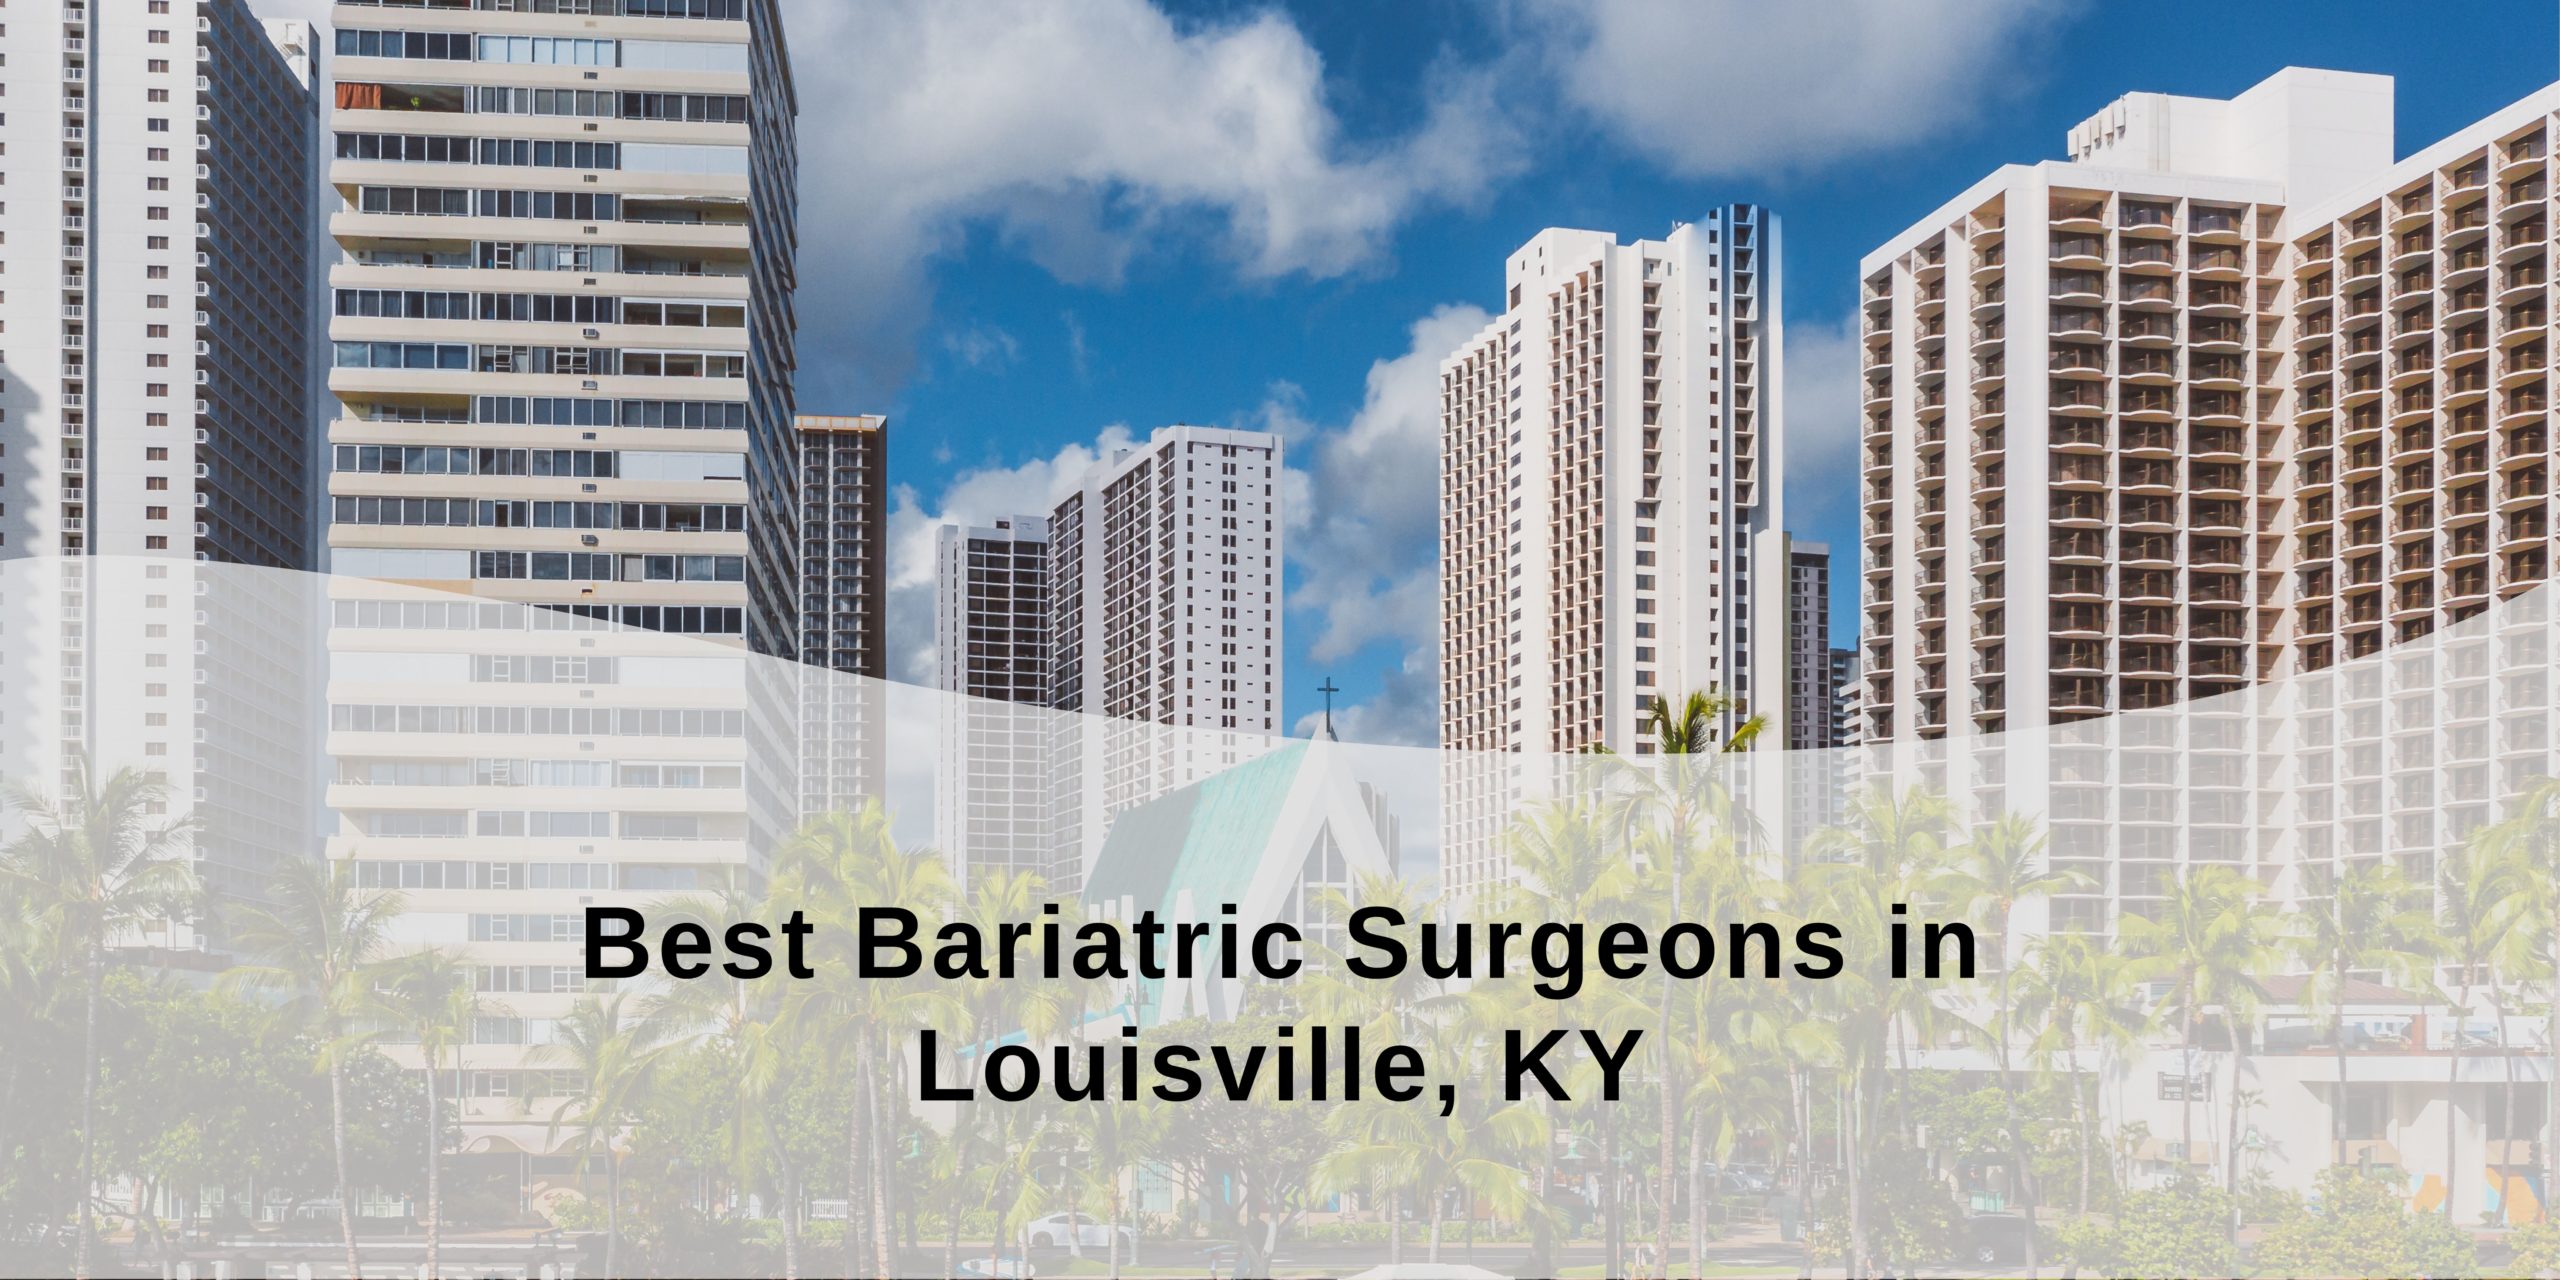 Best Bariatric Surgeons in Louisville, KY